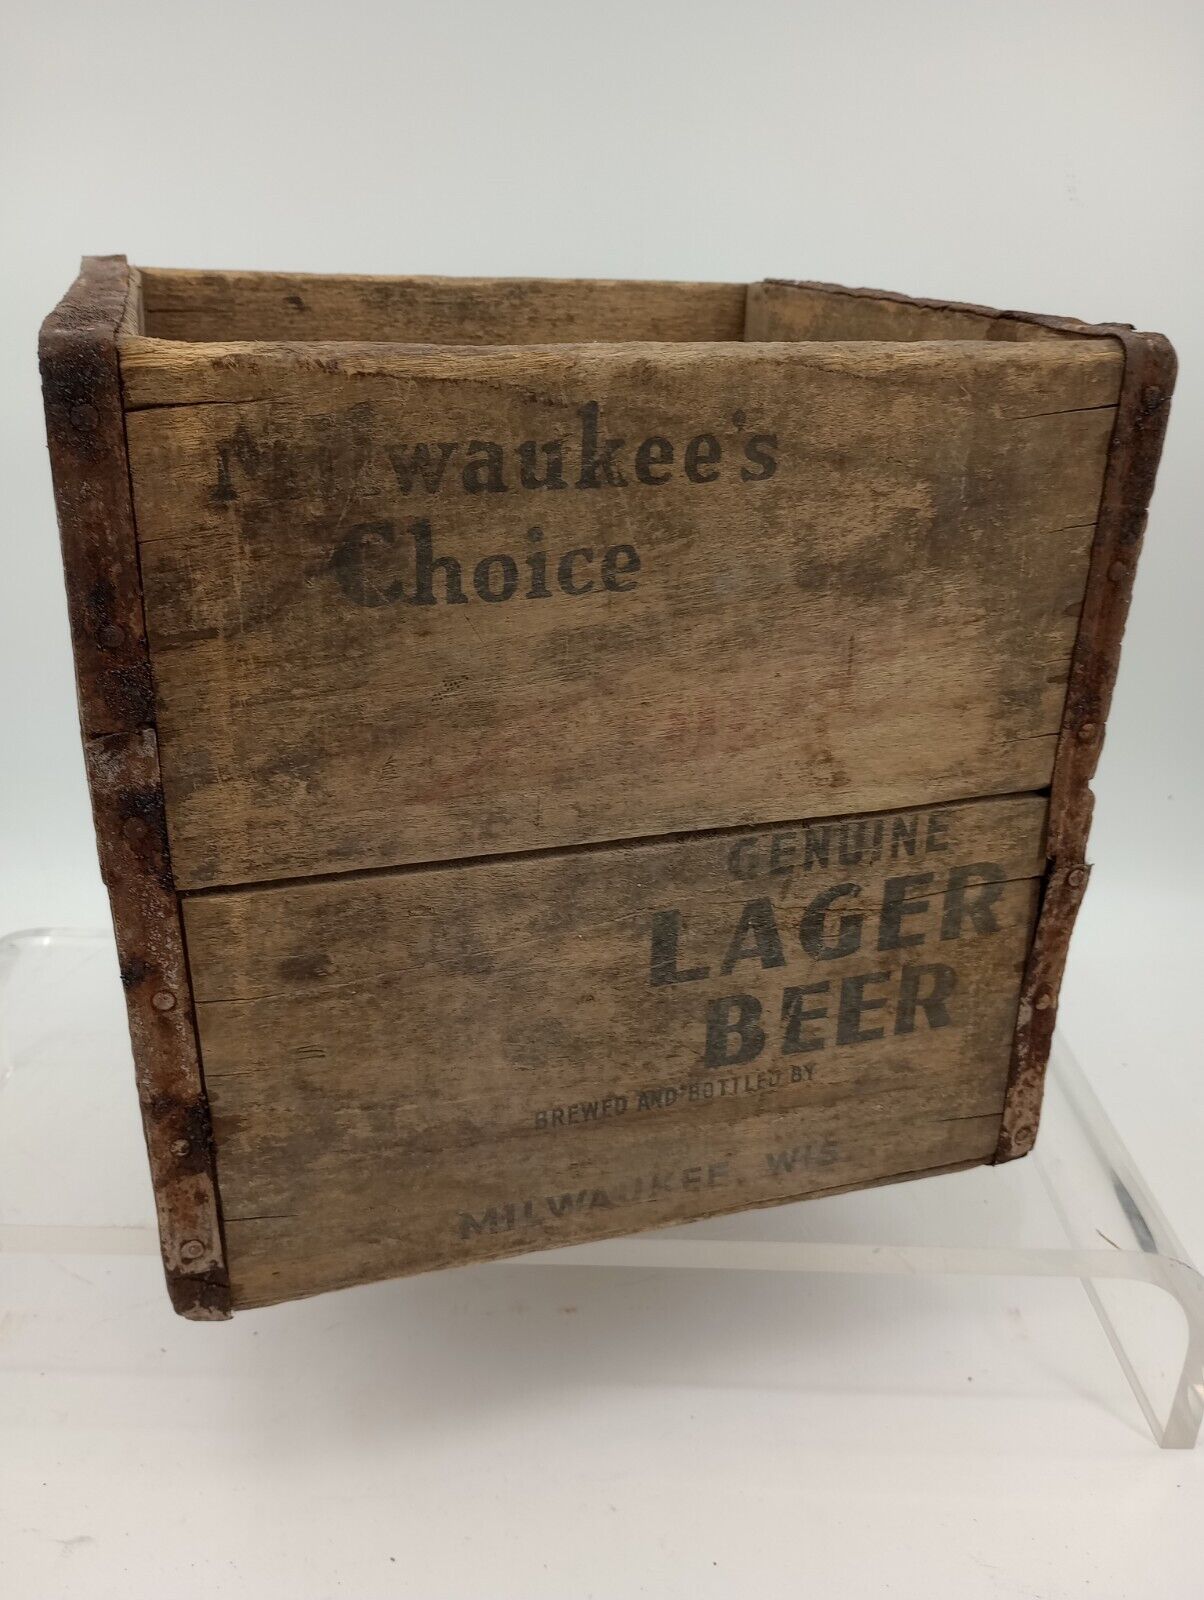 Rare Vintage Braumeister Beer - Milwaukee's Choice Wood Box Held 4 Half Gallons